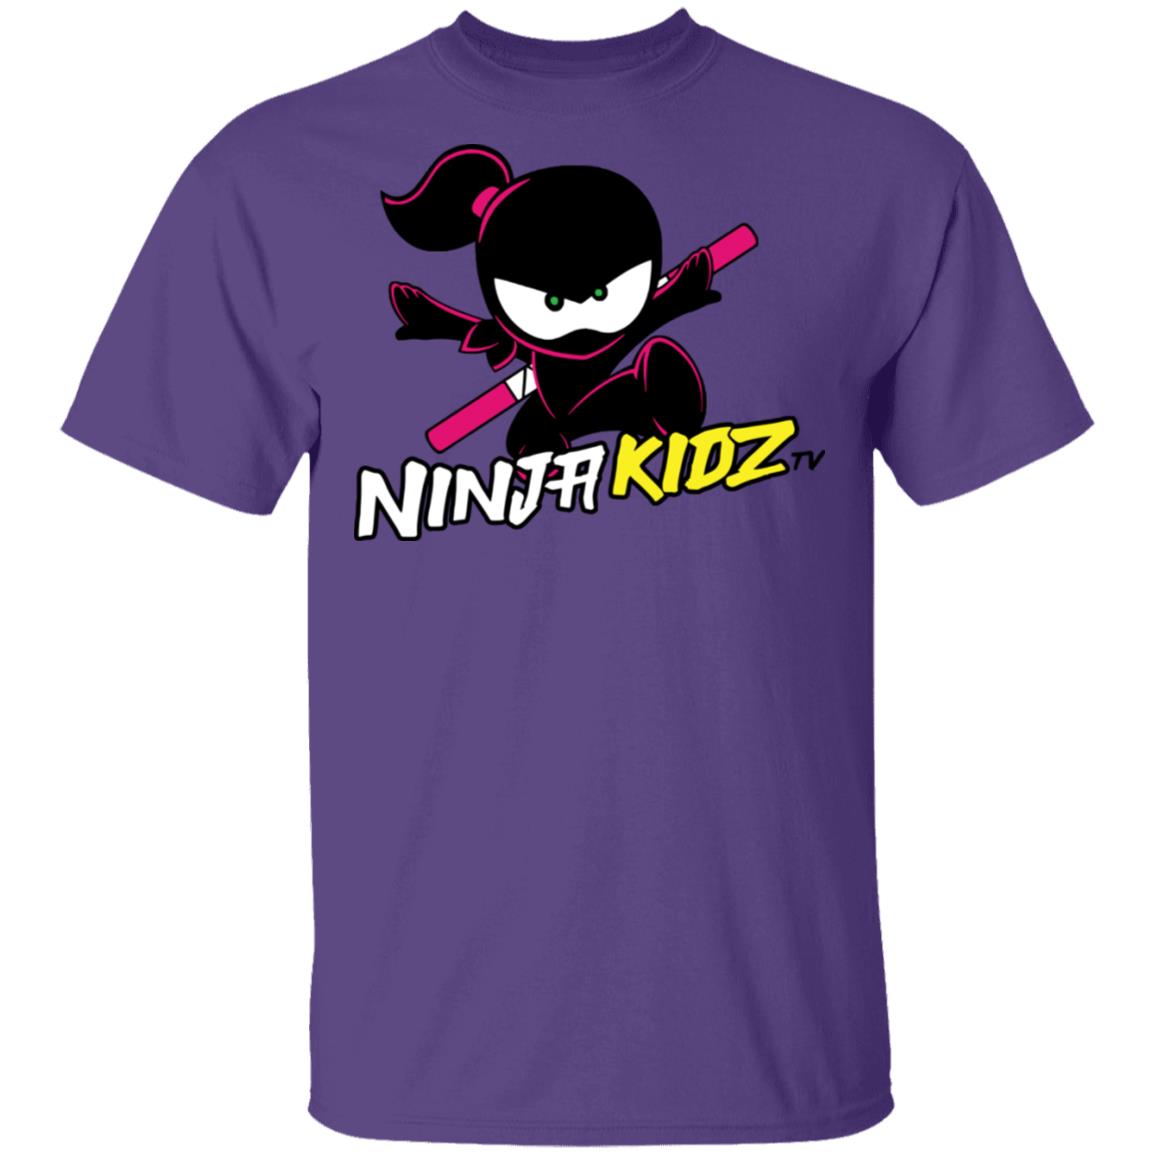  Ninja Kidz Official Girls Original Logo Tee- Dress